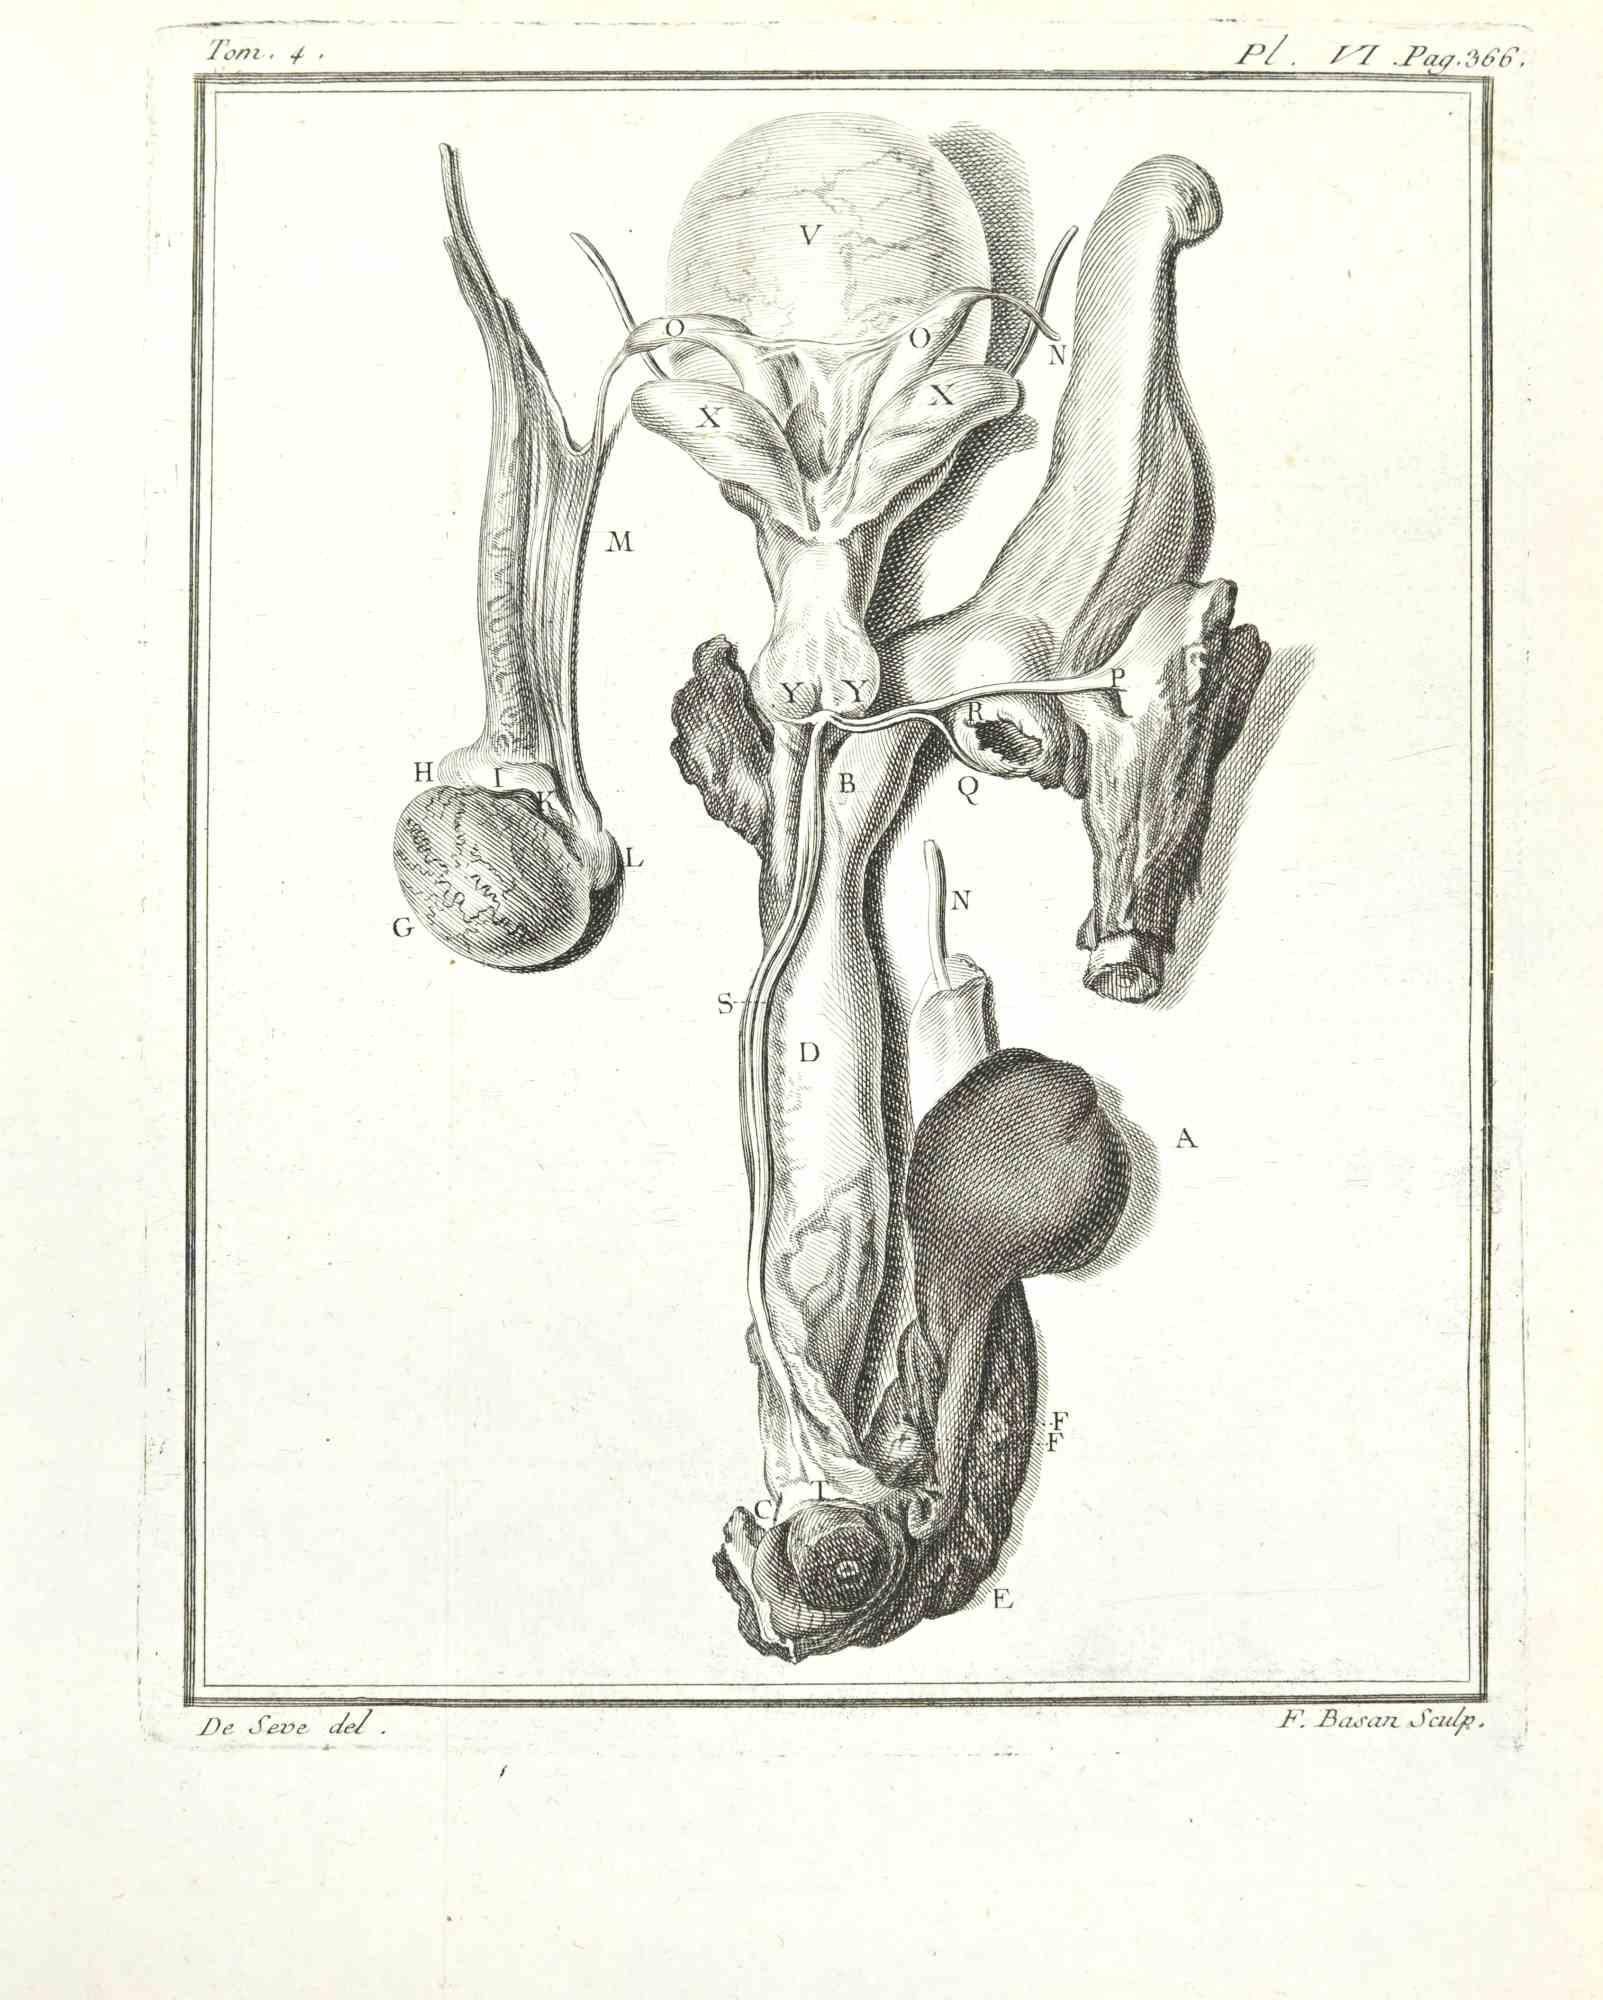 Pierre Francois Basan (1723-1797) after Founan Animal Print - Anatomy of Animals - Etching by F. Basan - 1771